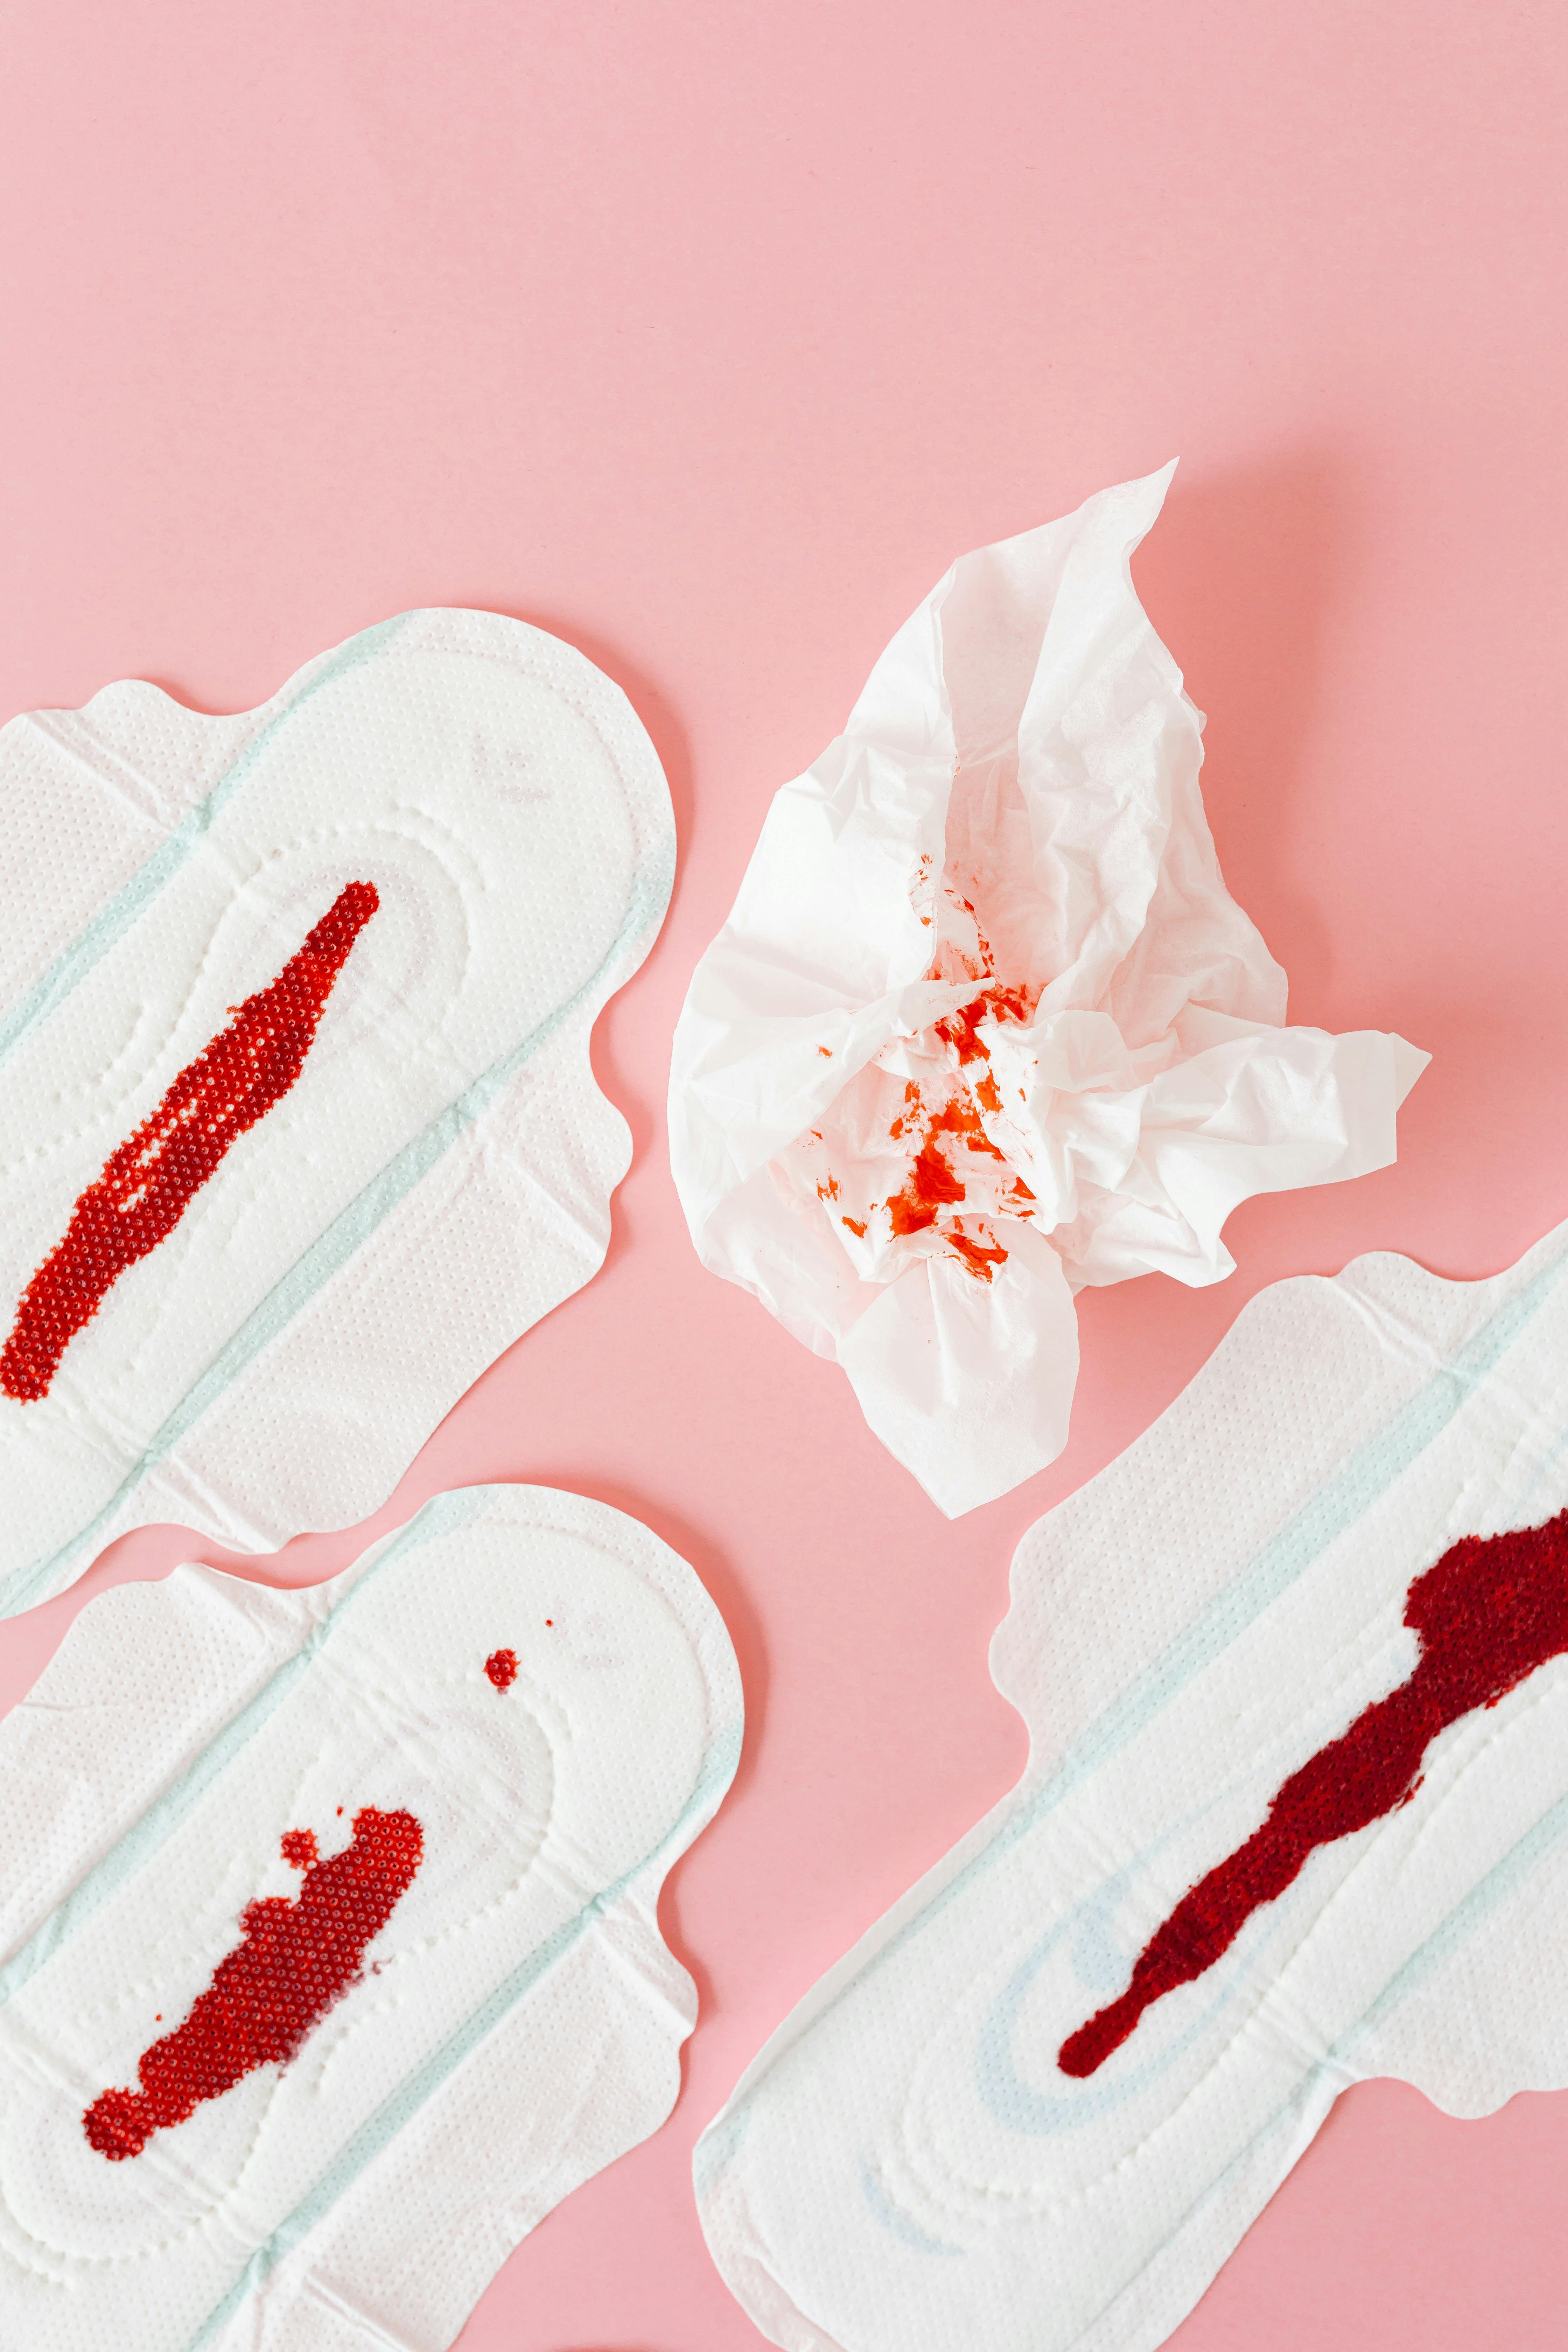 period blood girls